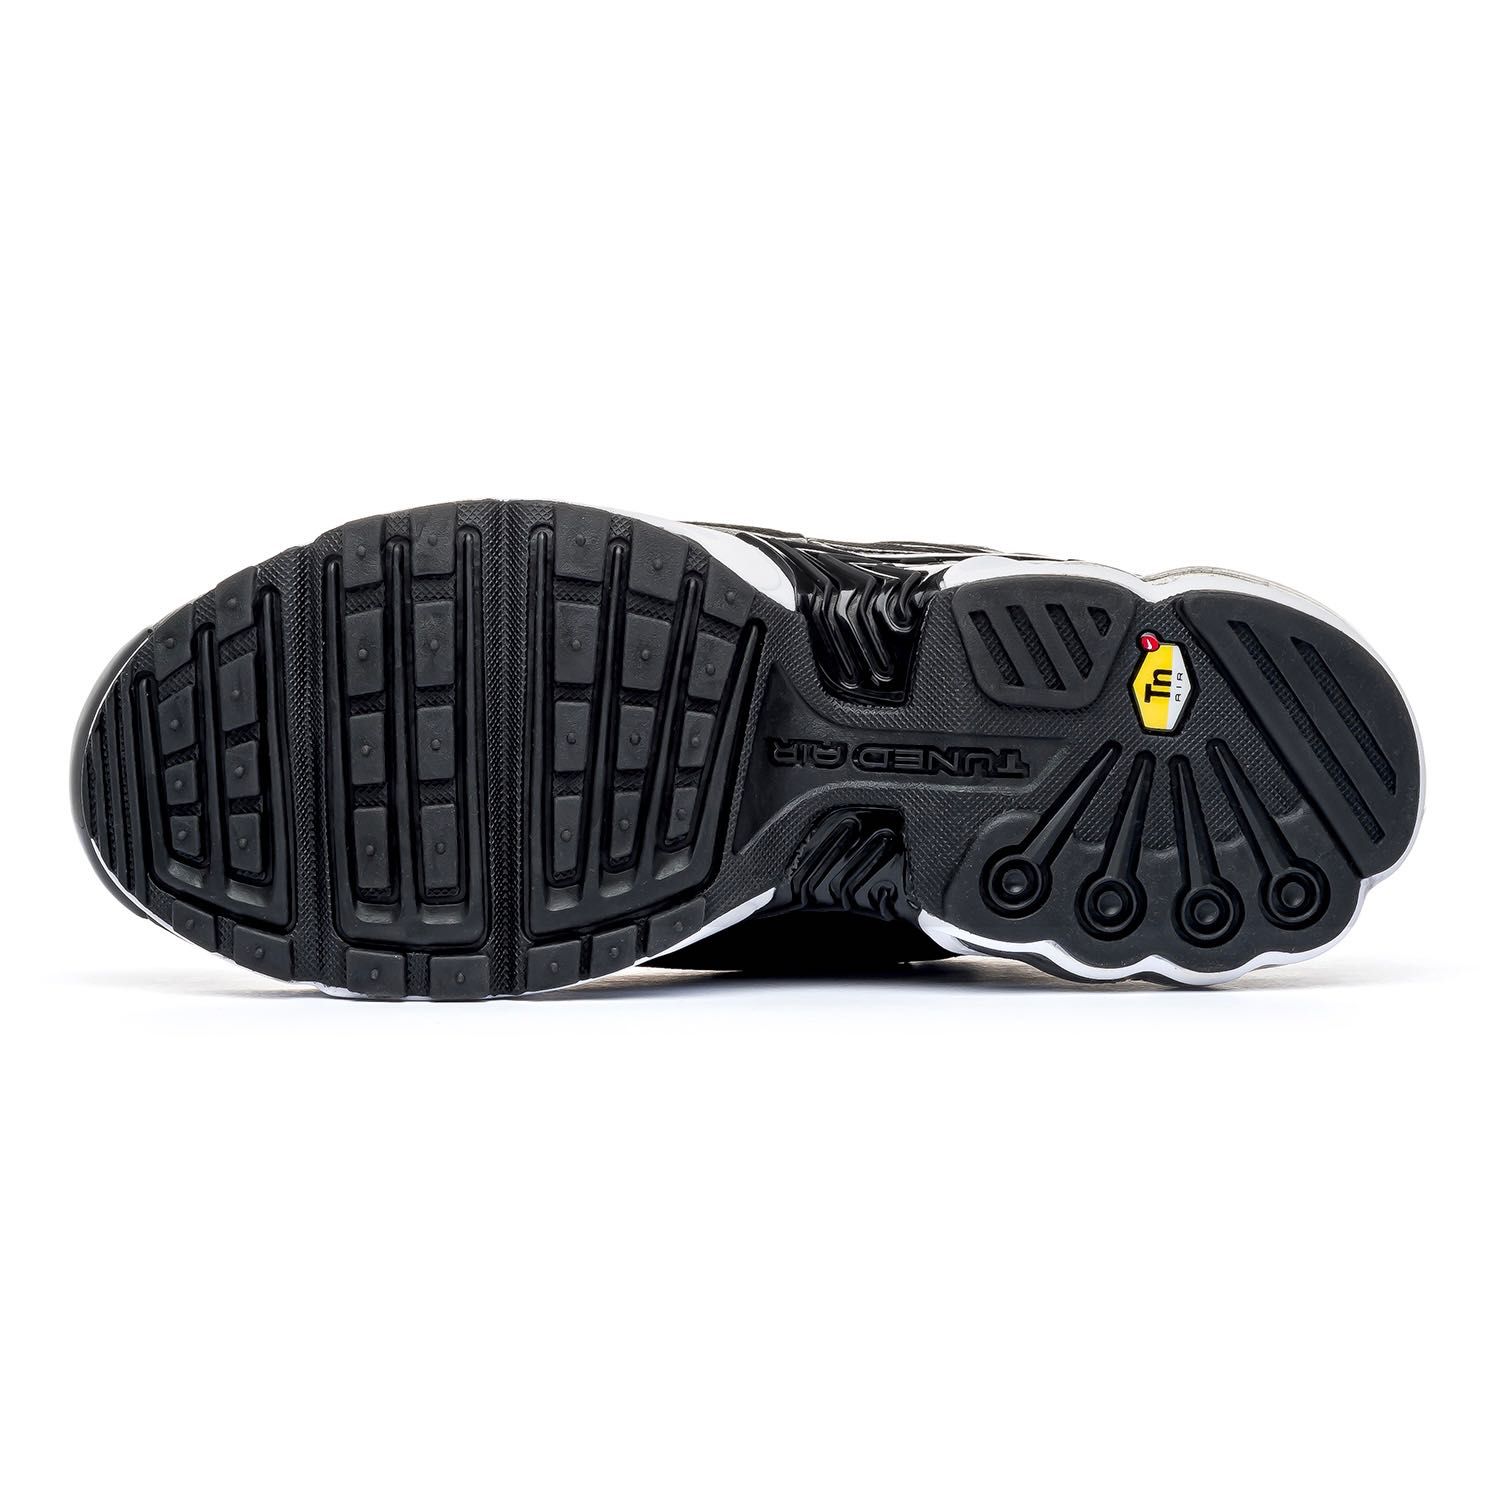 Мужские кроссовки Nike Air Max TN Plus 3 Leather Black White. 41-45